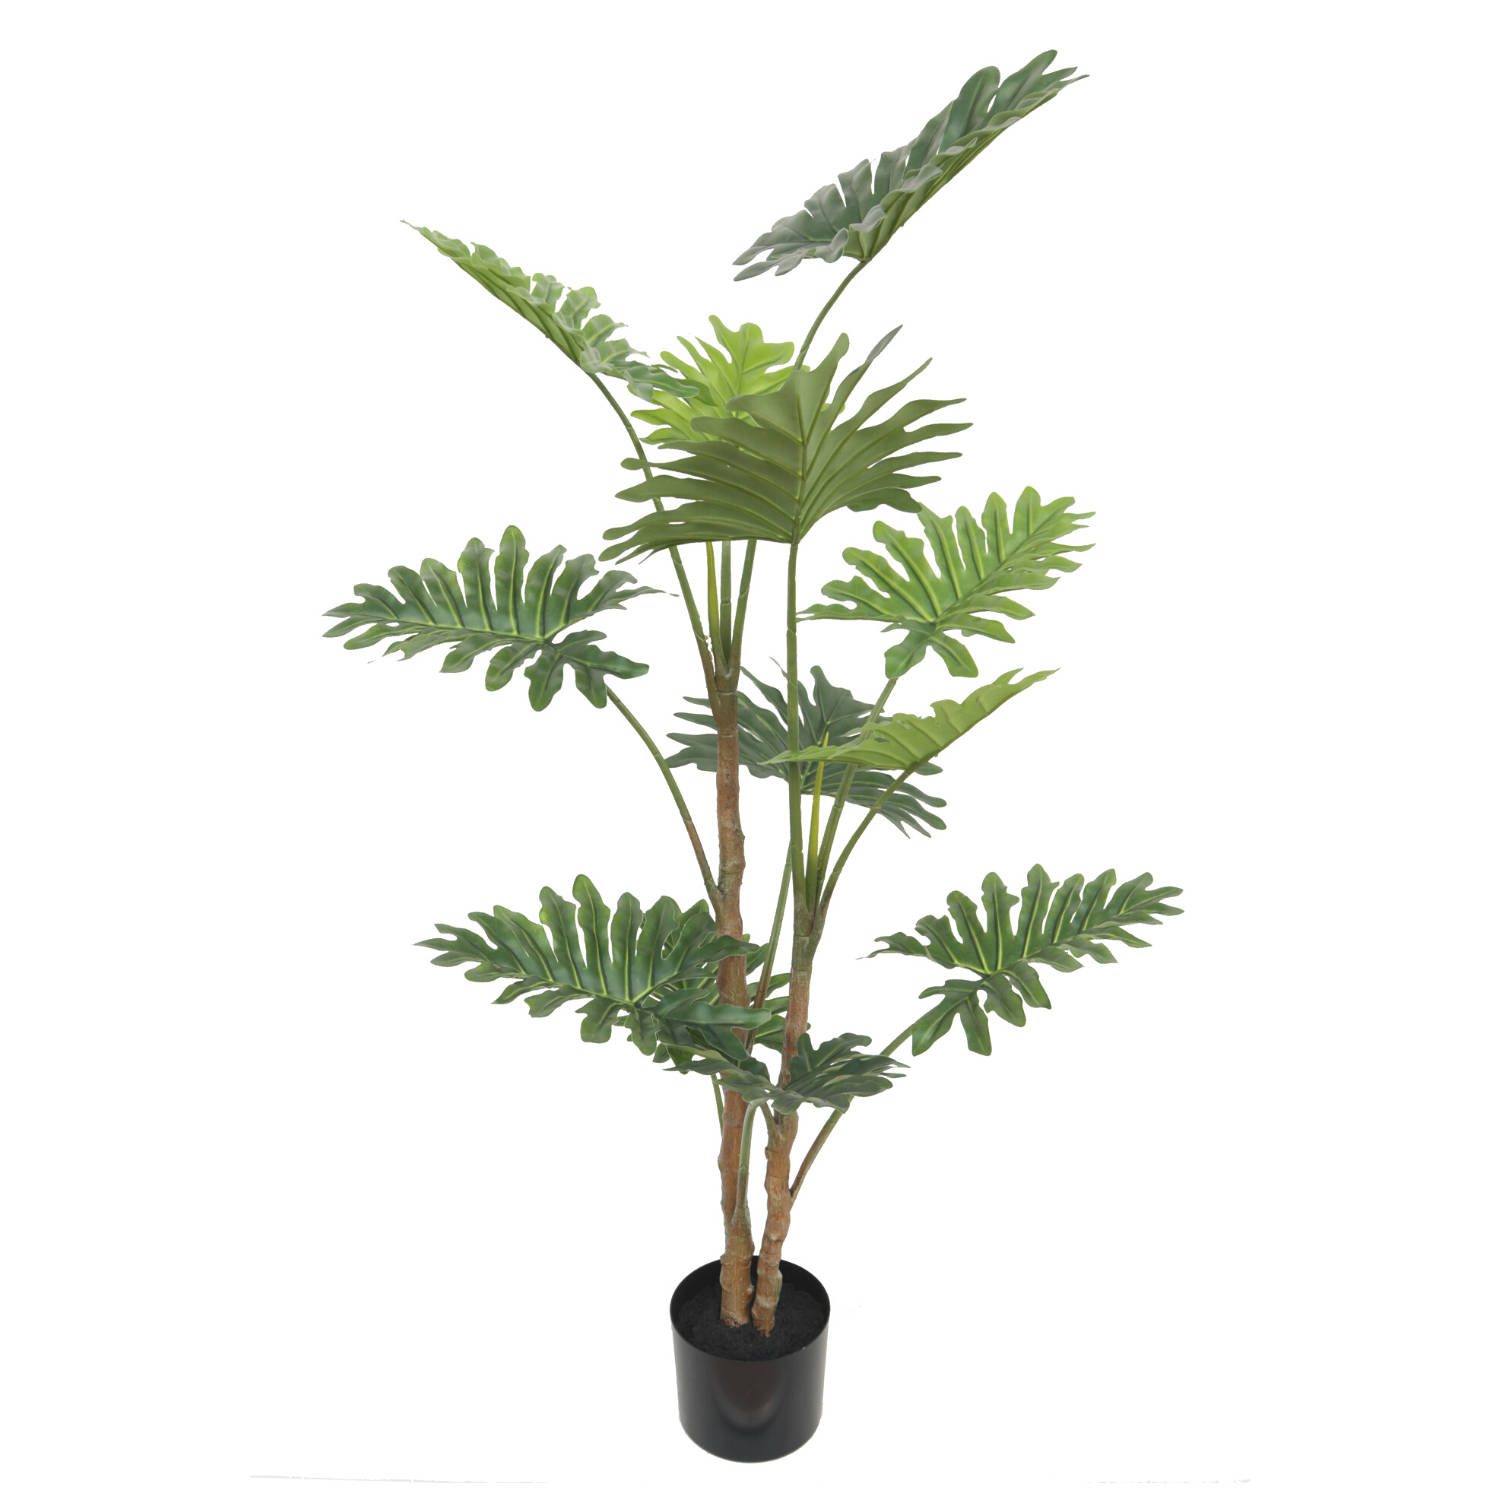 Philodendron Kunstplant 130cm | Kunstplant voor binnen | Nep Philodendron plant| Kunst Philodendron 130cm